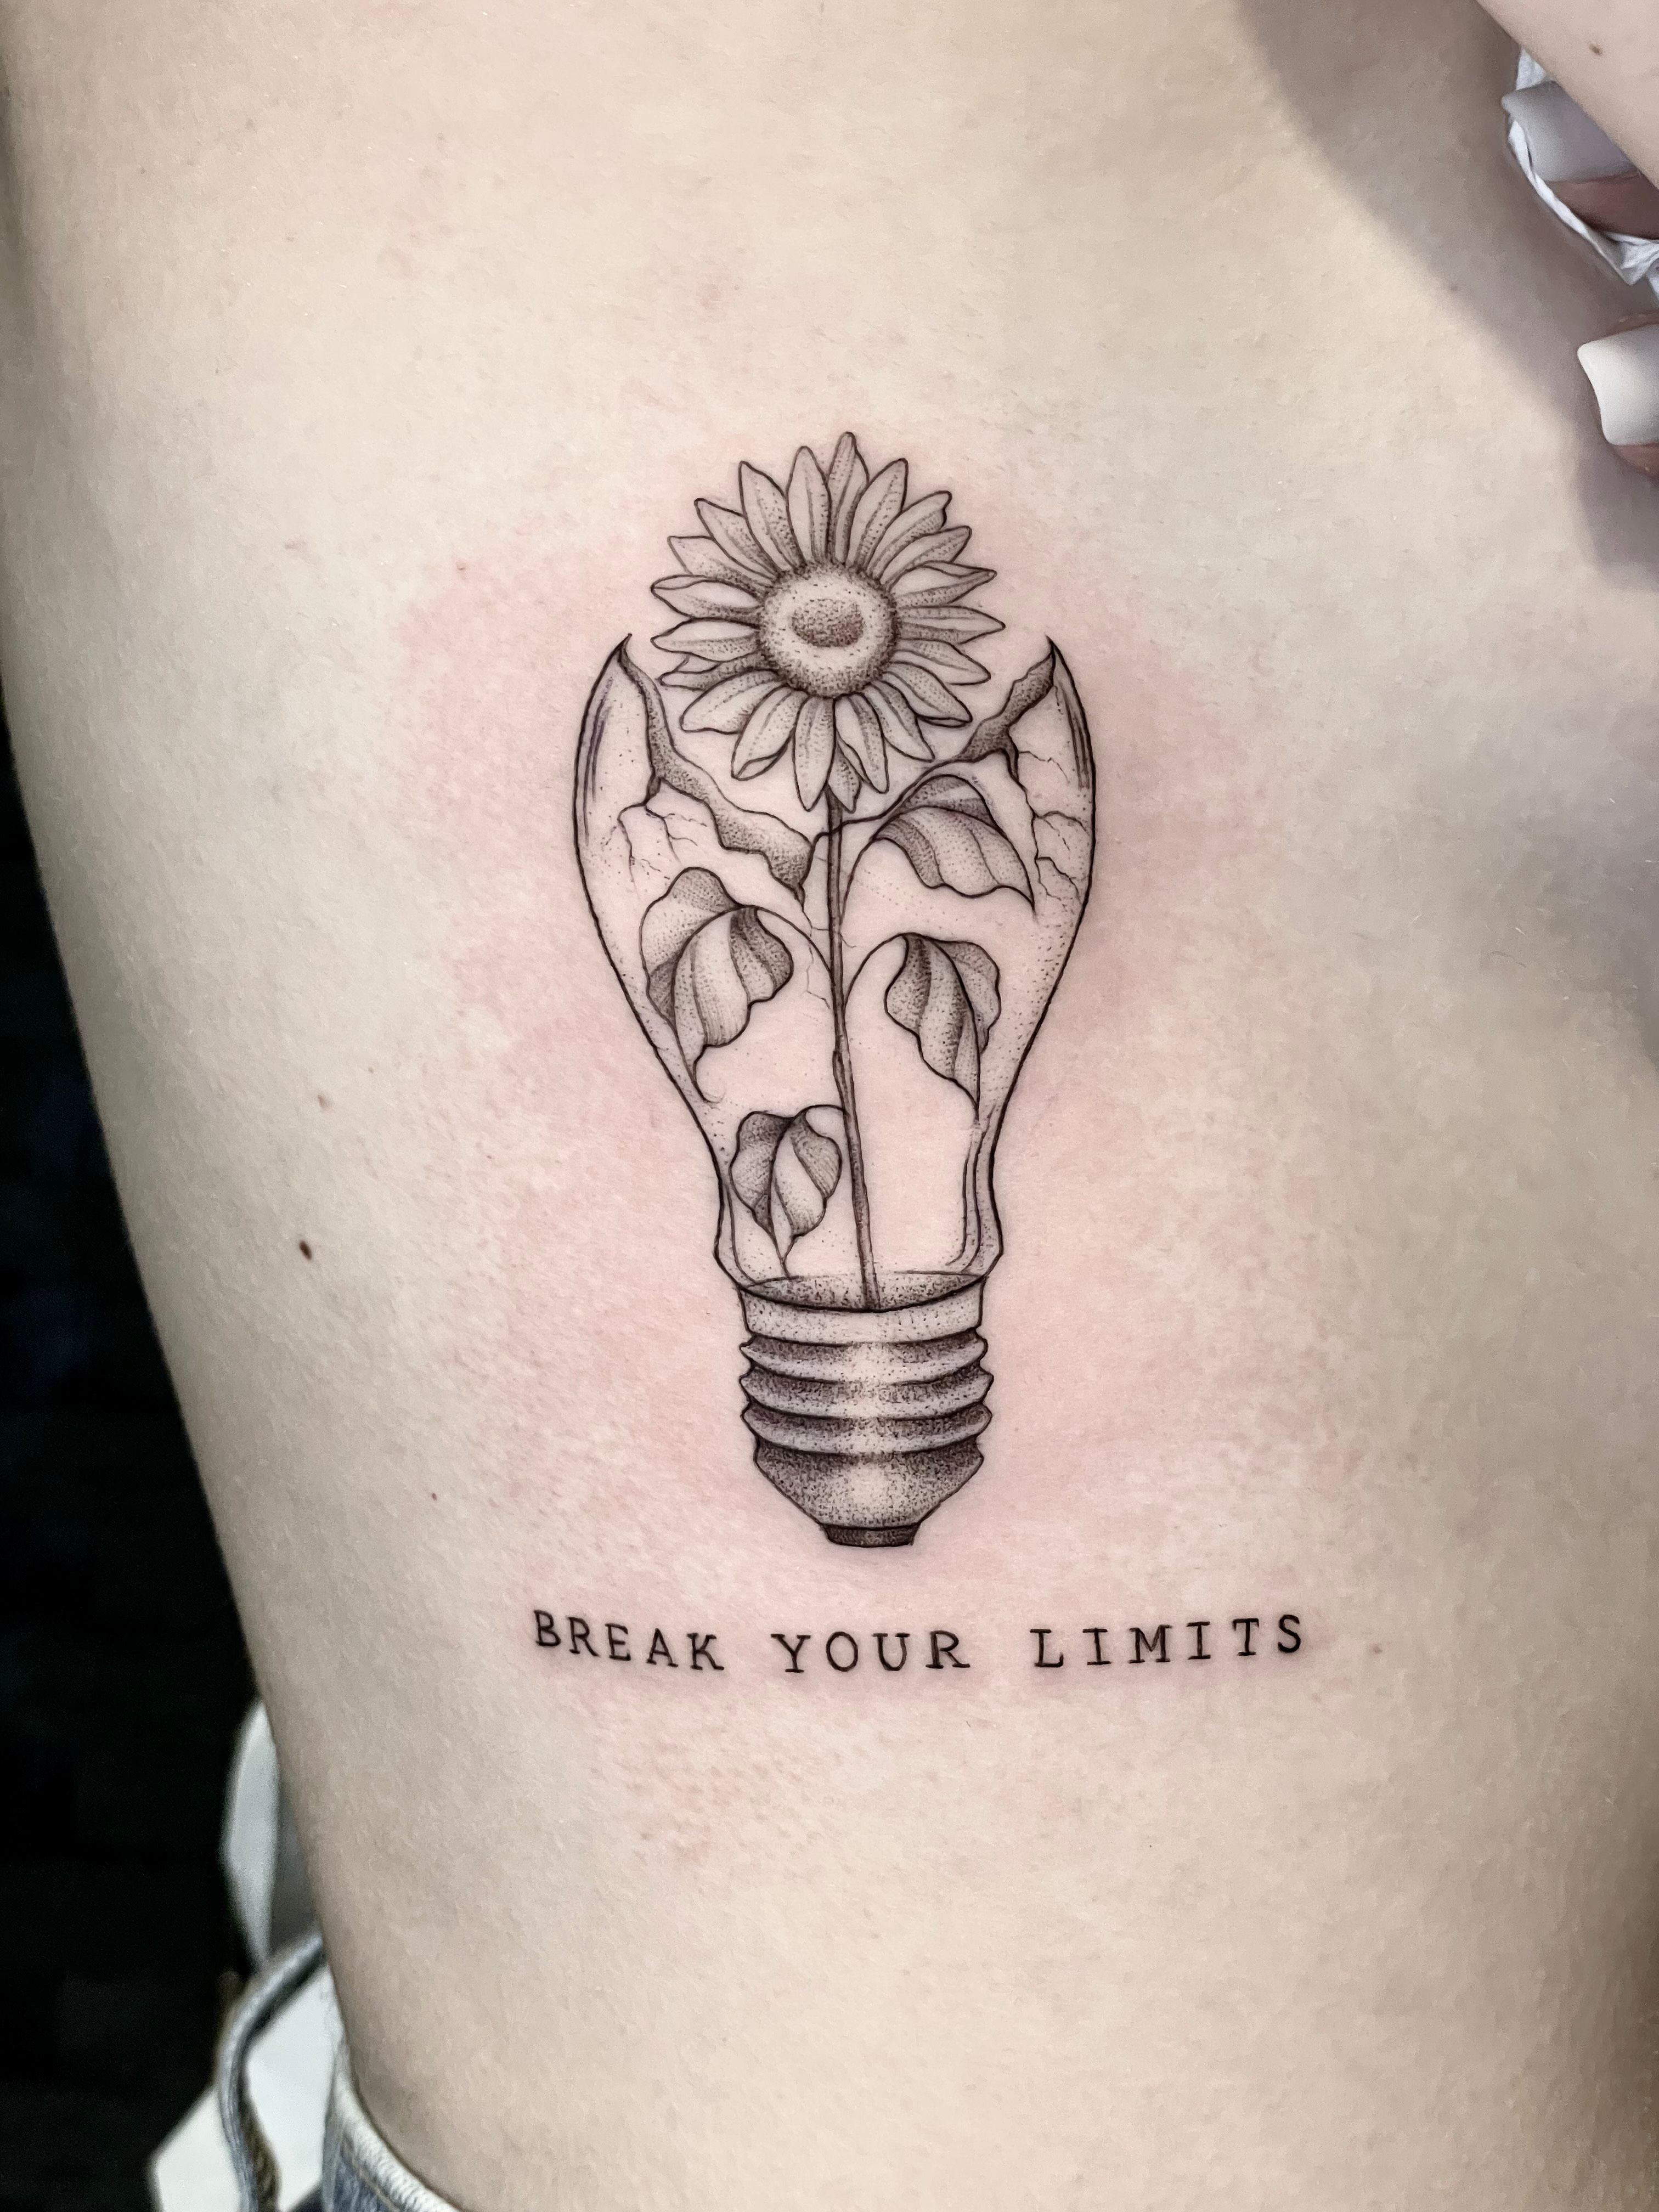 Glowing Tattoo by NickDAngeloTattoos on DeviantArt